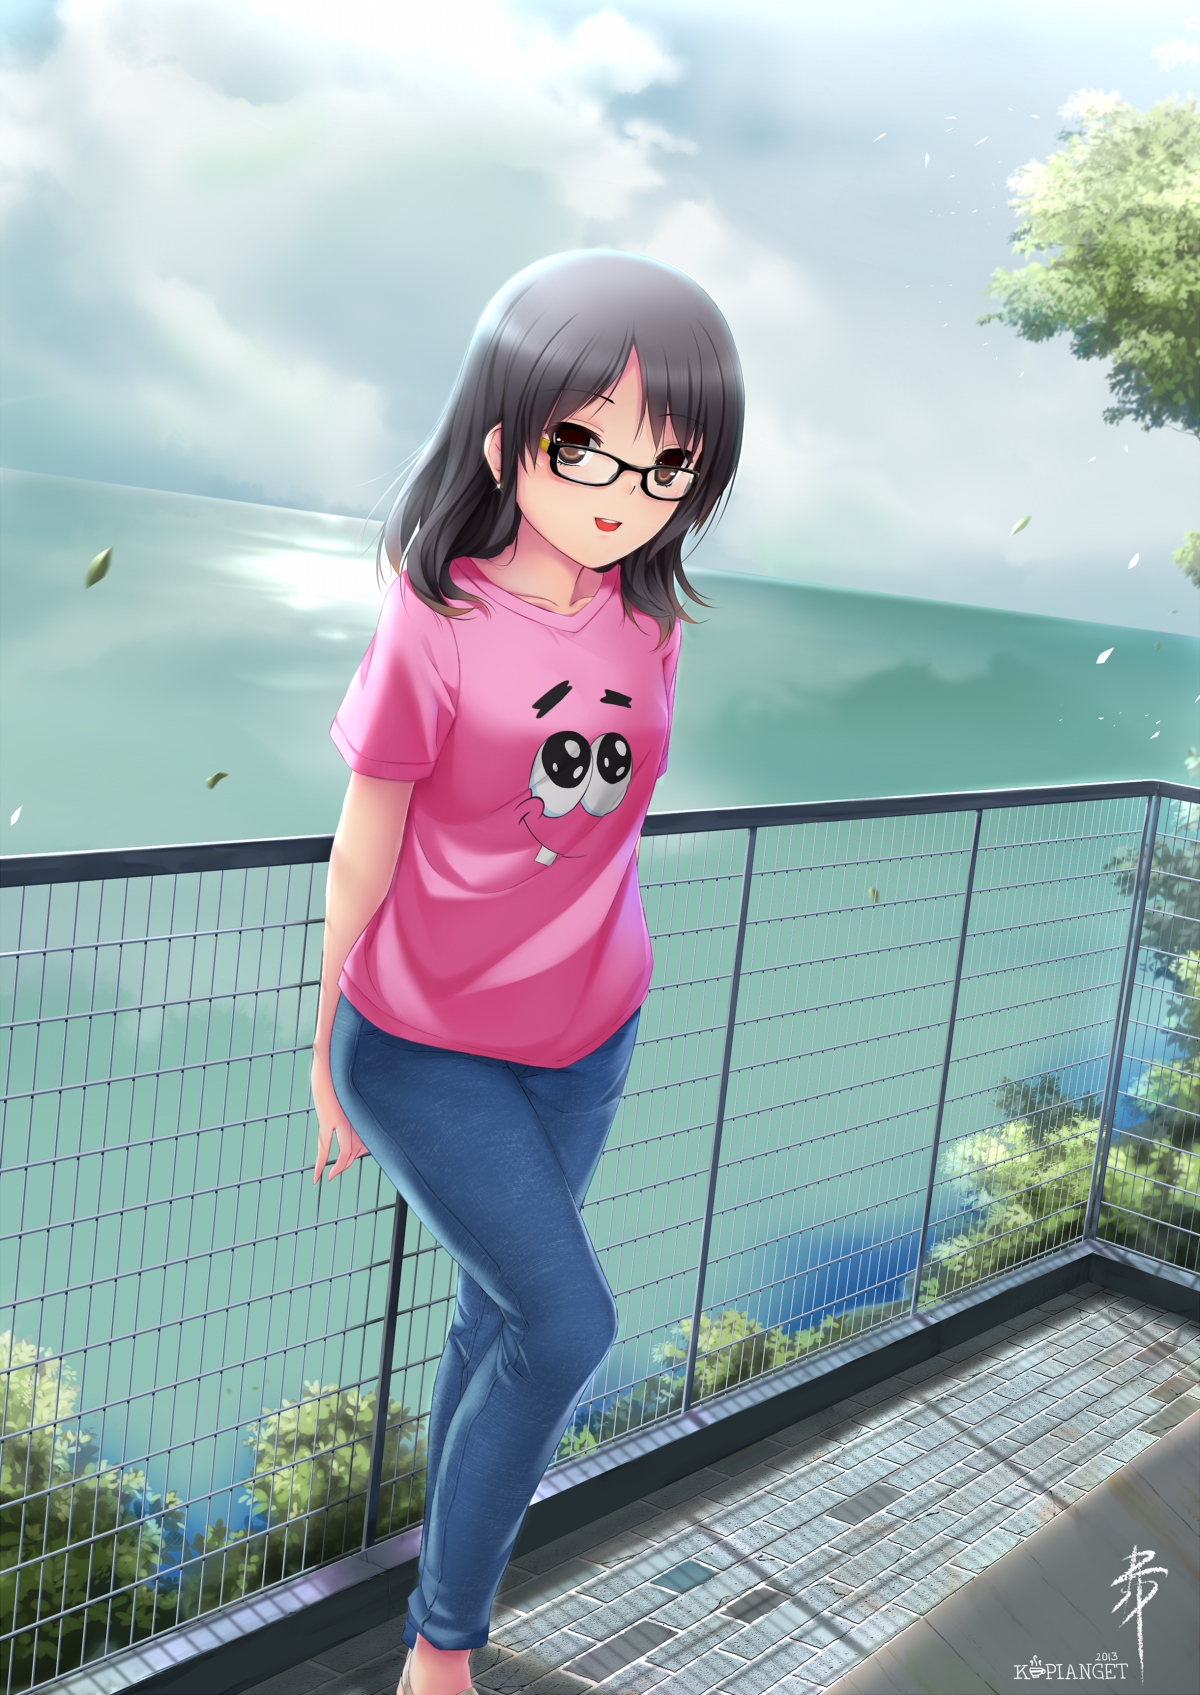 Long Hair Anime Anime Girls Jeans Black Hair Brown Eyes Glasses 10x1695 Wallpaper Wallhaven Cc